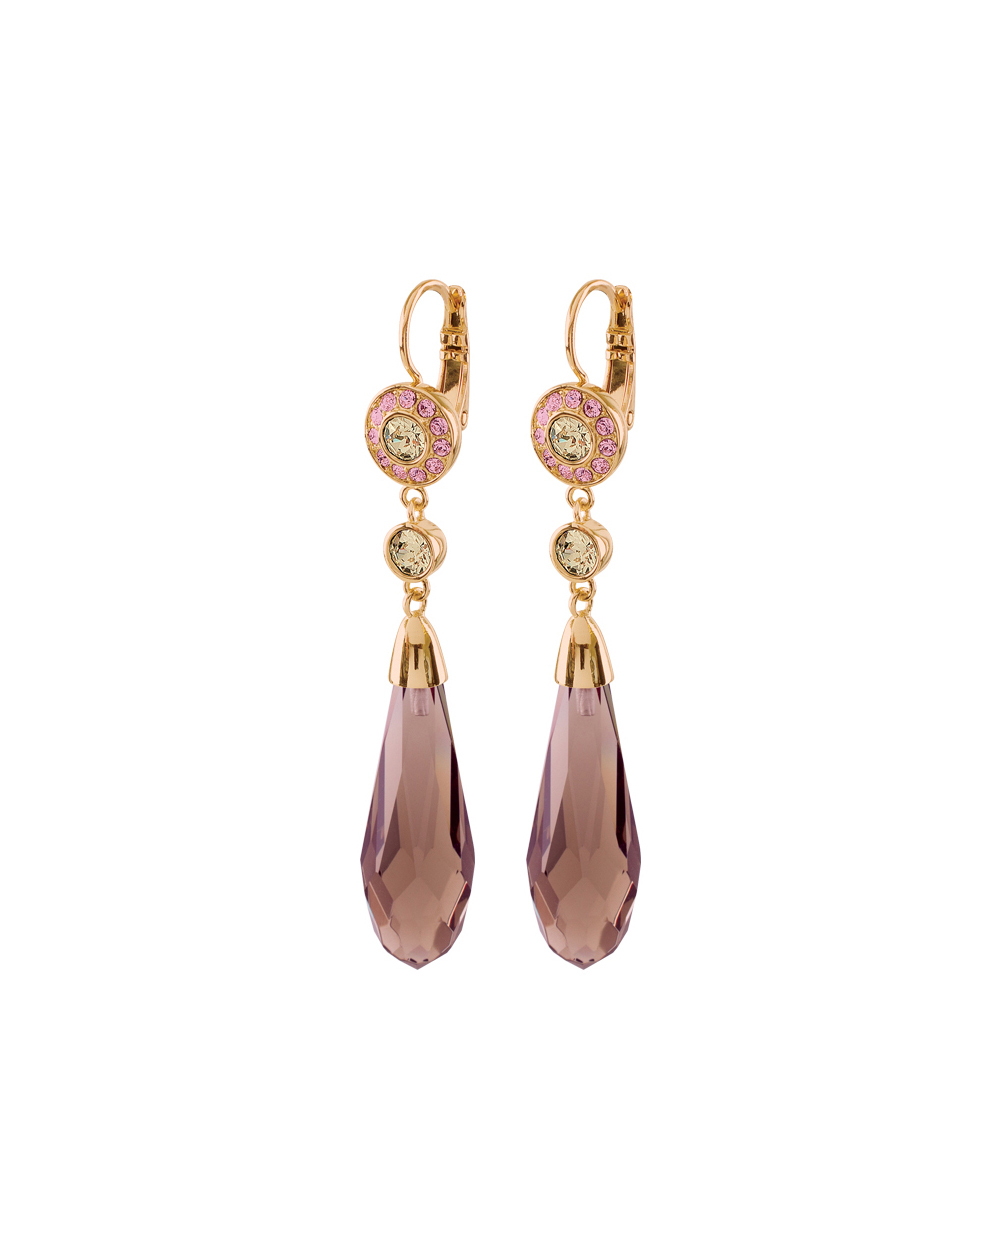 Dyberg Kern earrings, $249